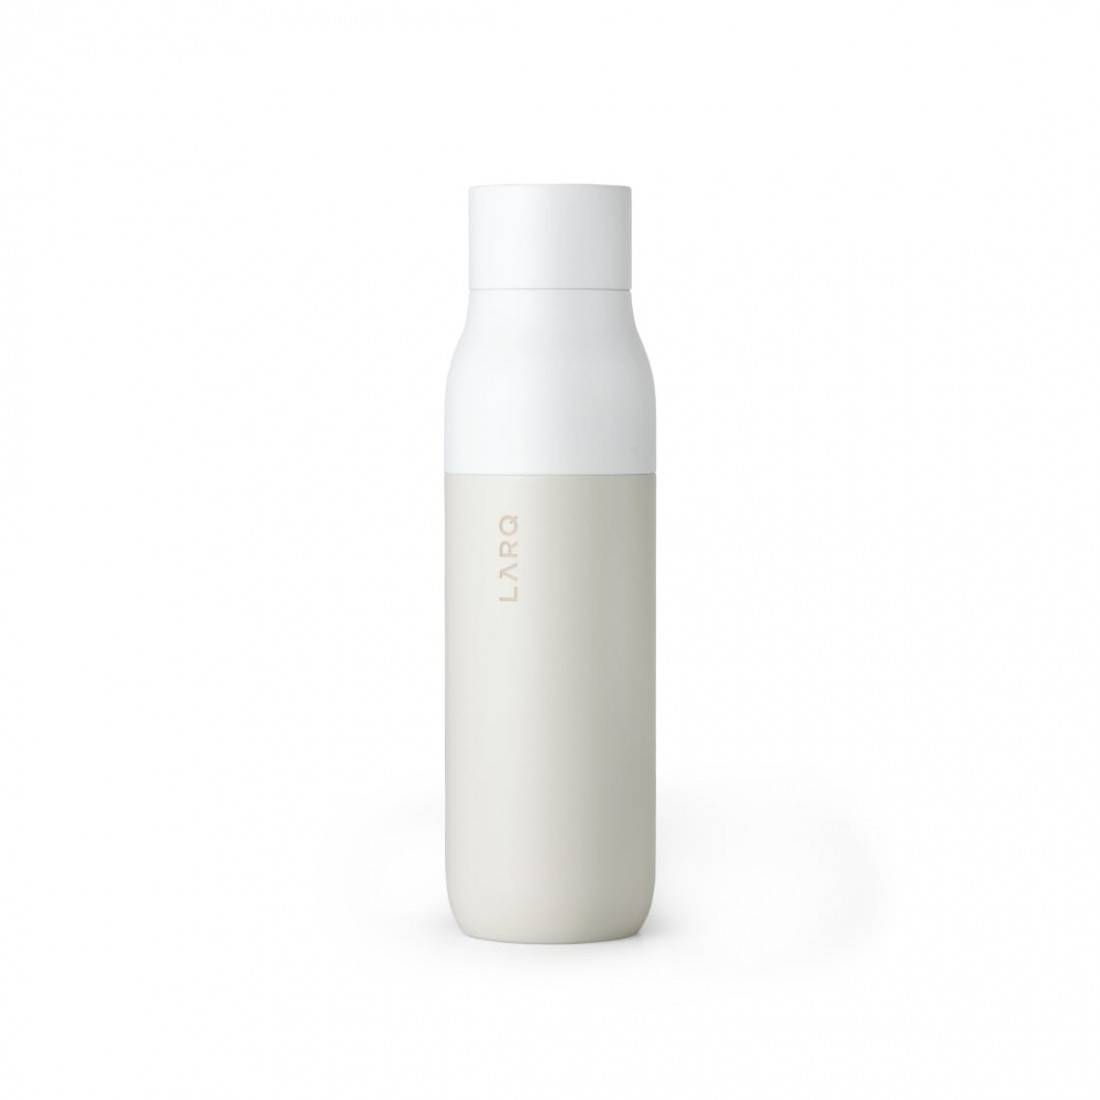 LARQ Bottle PureVis Granite White 500 ml - Insulated